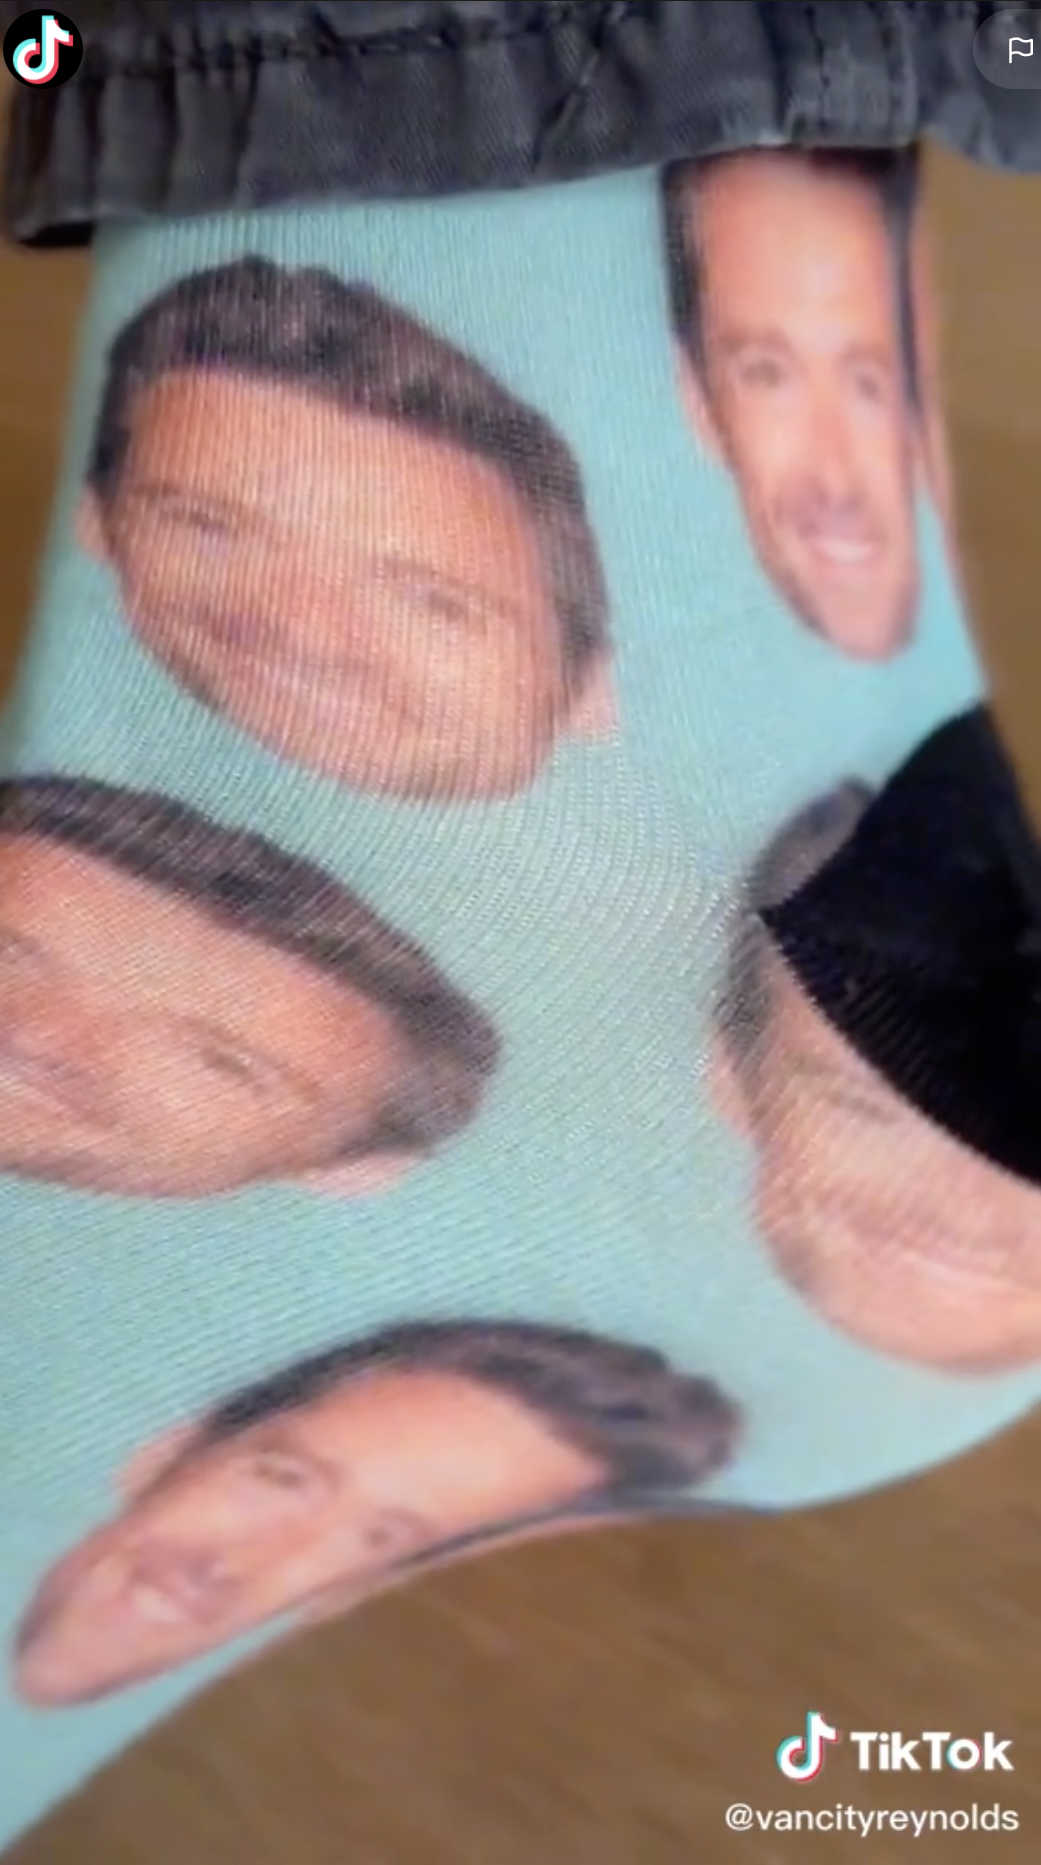 A closeup of the socks